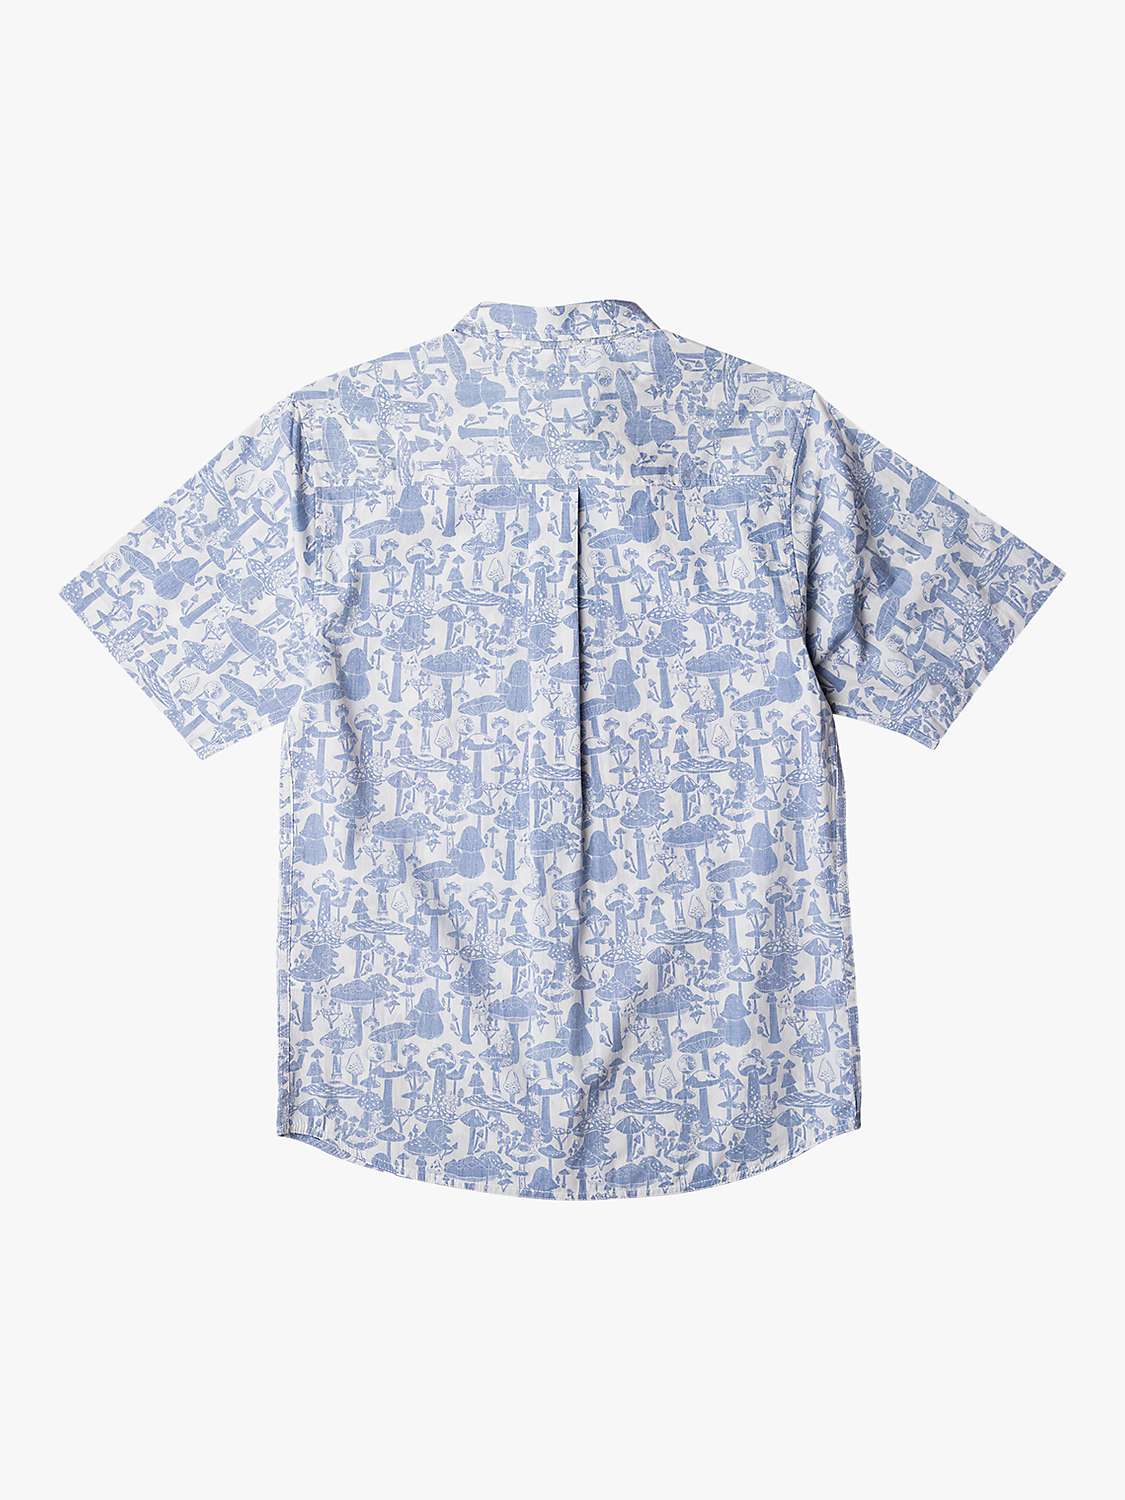 Buy KAVU Topspot Reverse Print Short Sleeve Shirt, Mushroom Forest Online at johnlewis.com